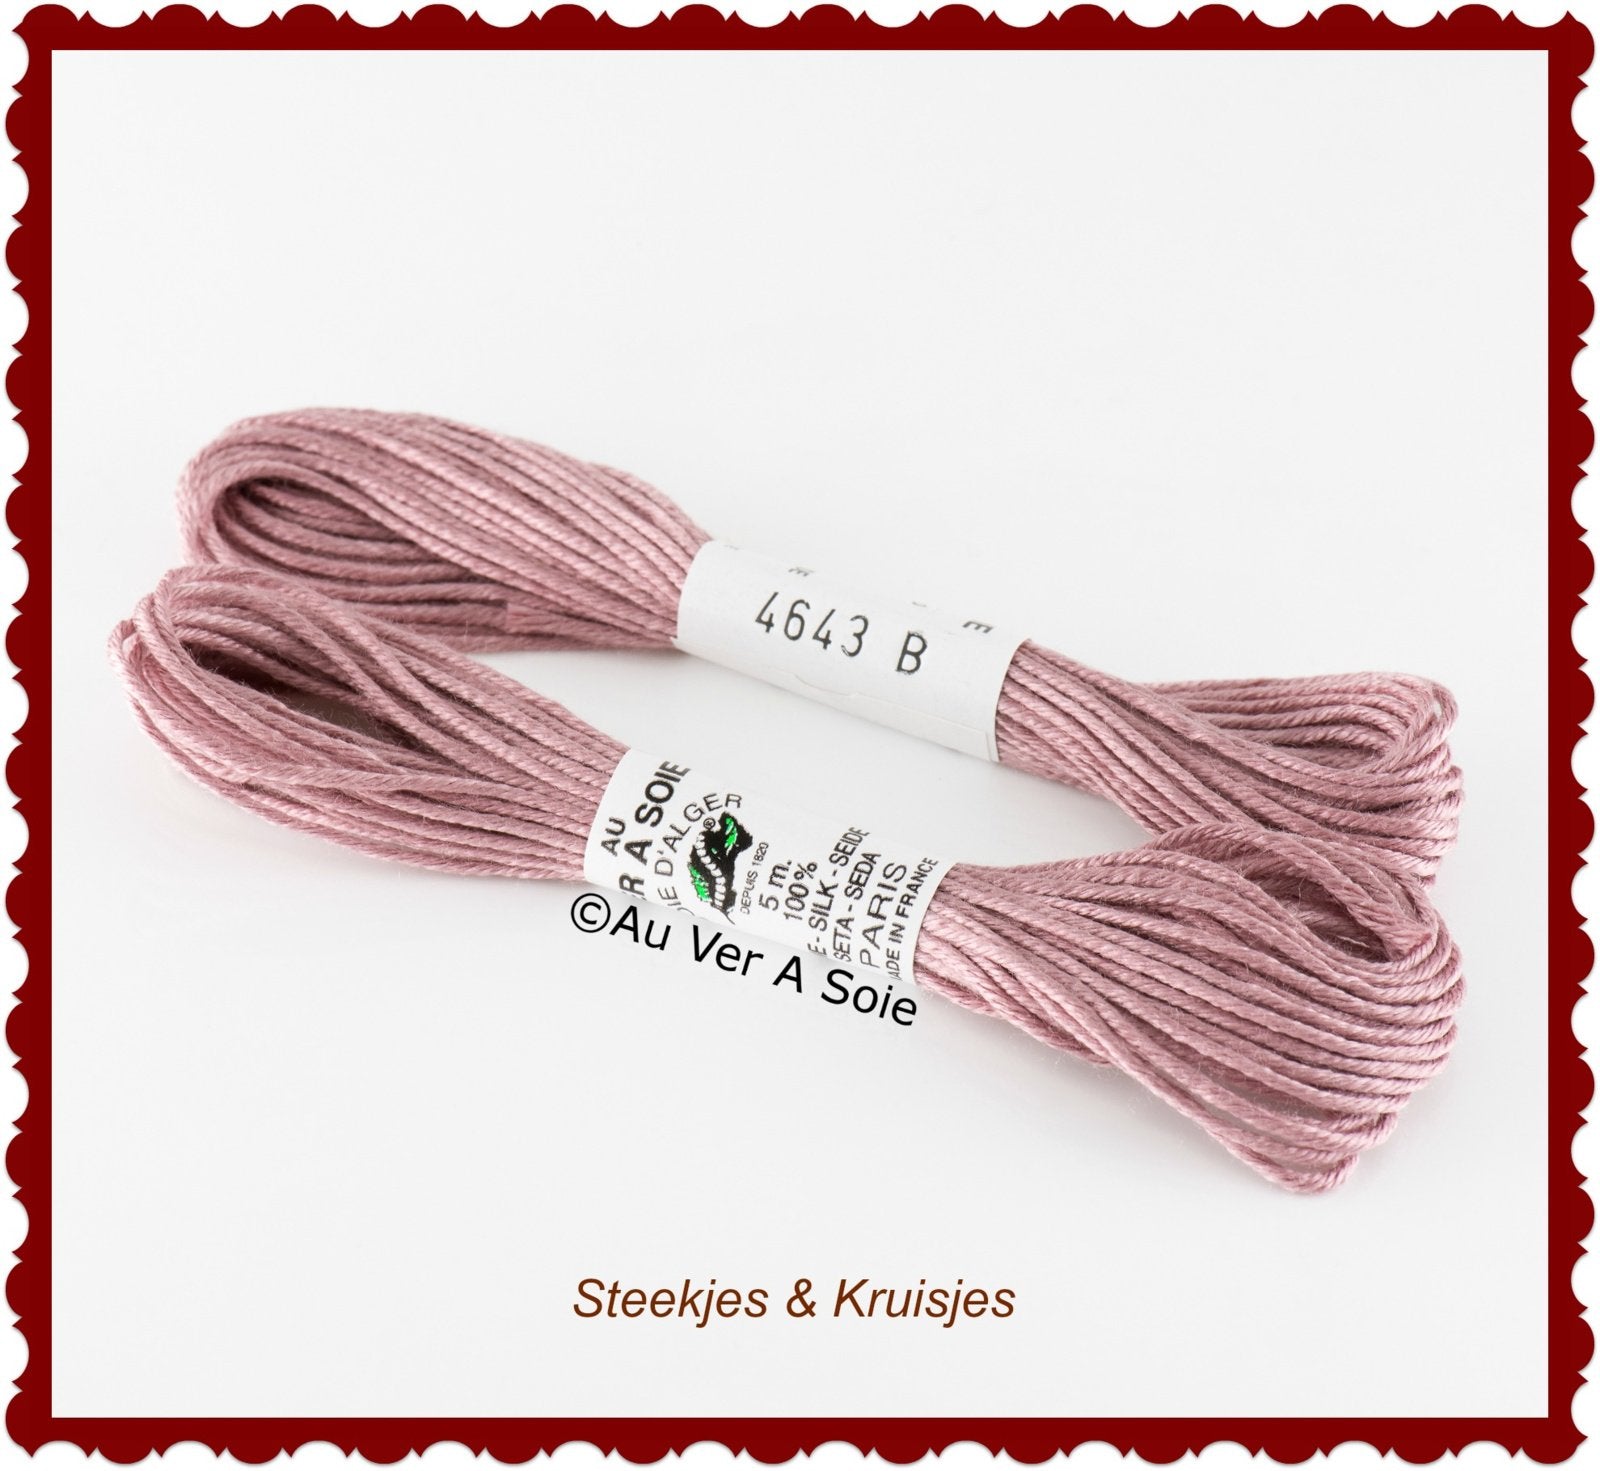 Au ver ie "soie d'alger" silk yarn color no. 4643